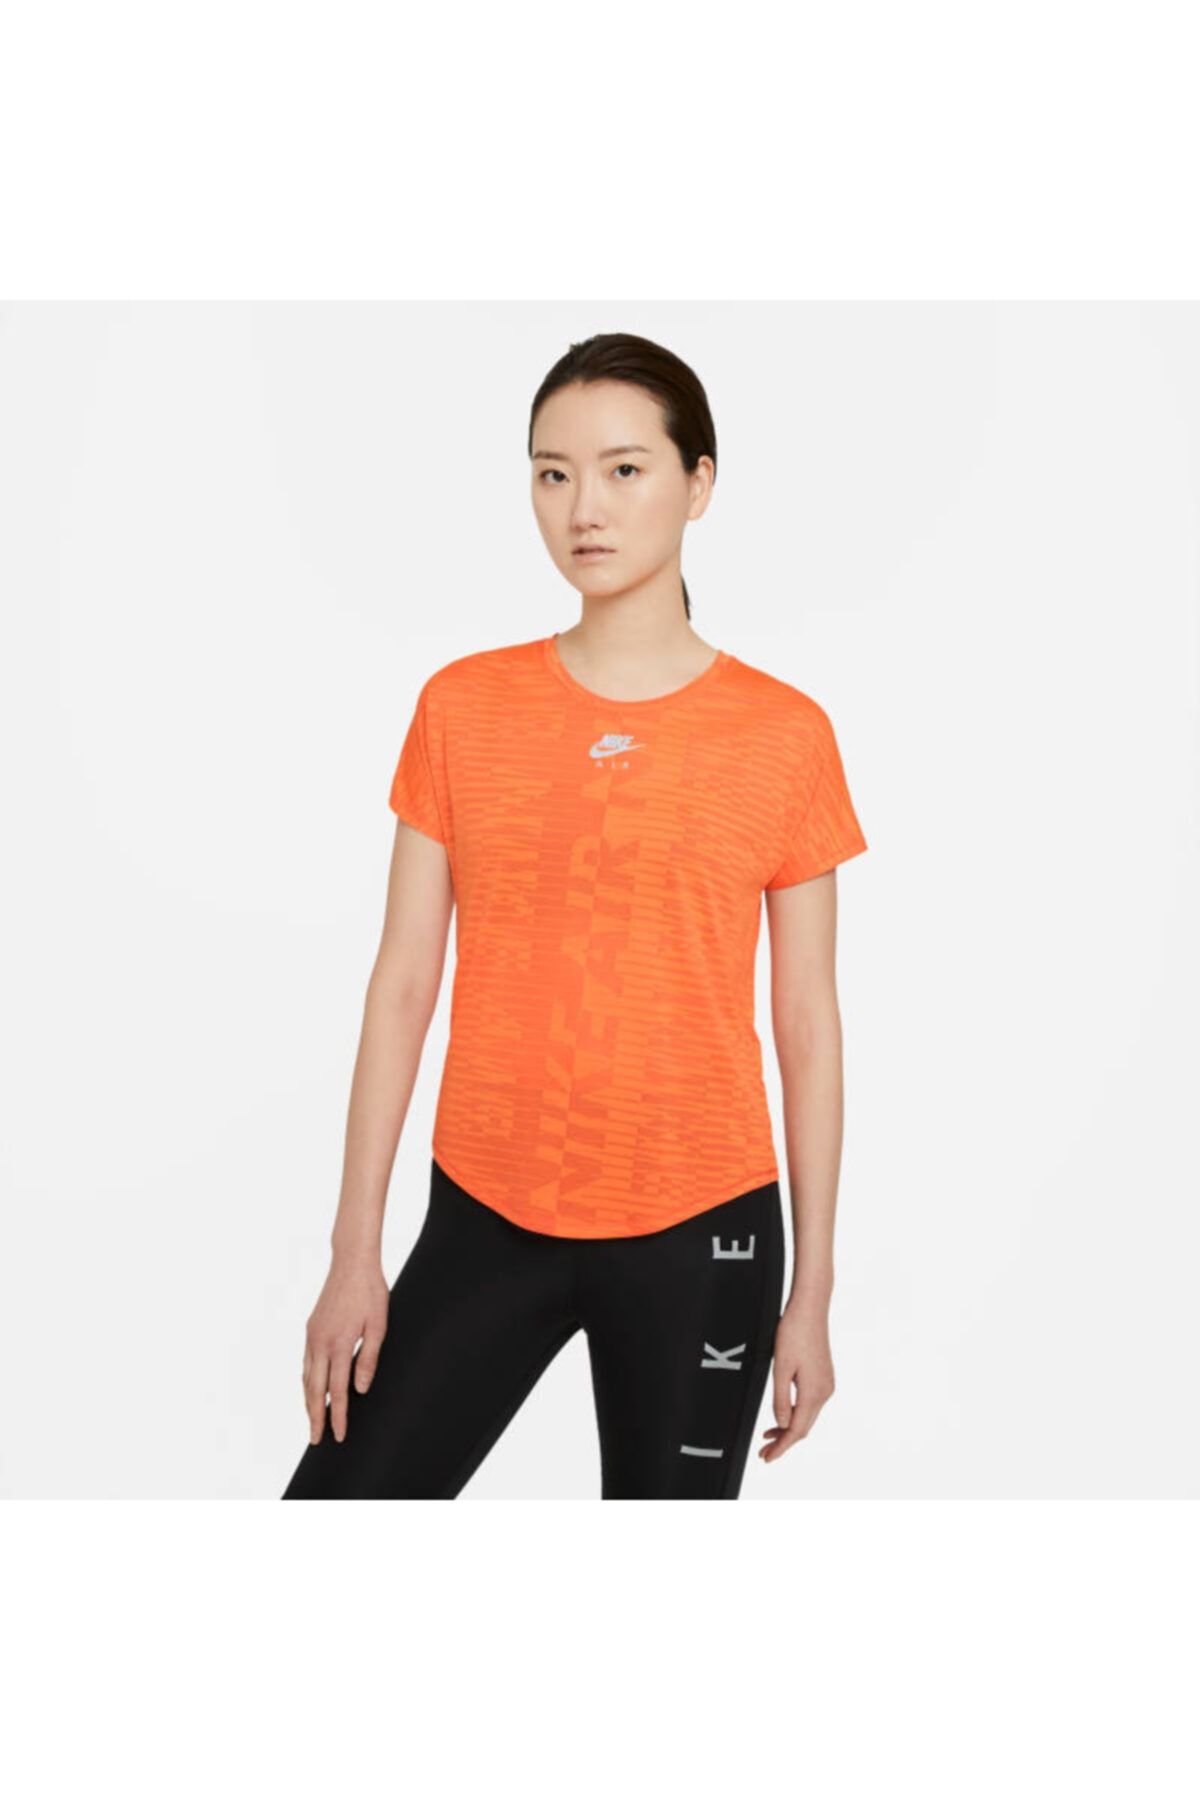 Nike Air Short-sleeve Running Top Kadın Tişört - Turuncu